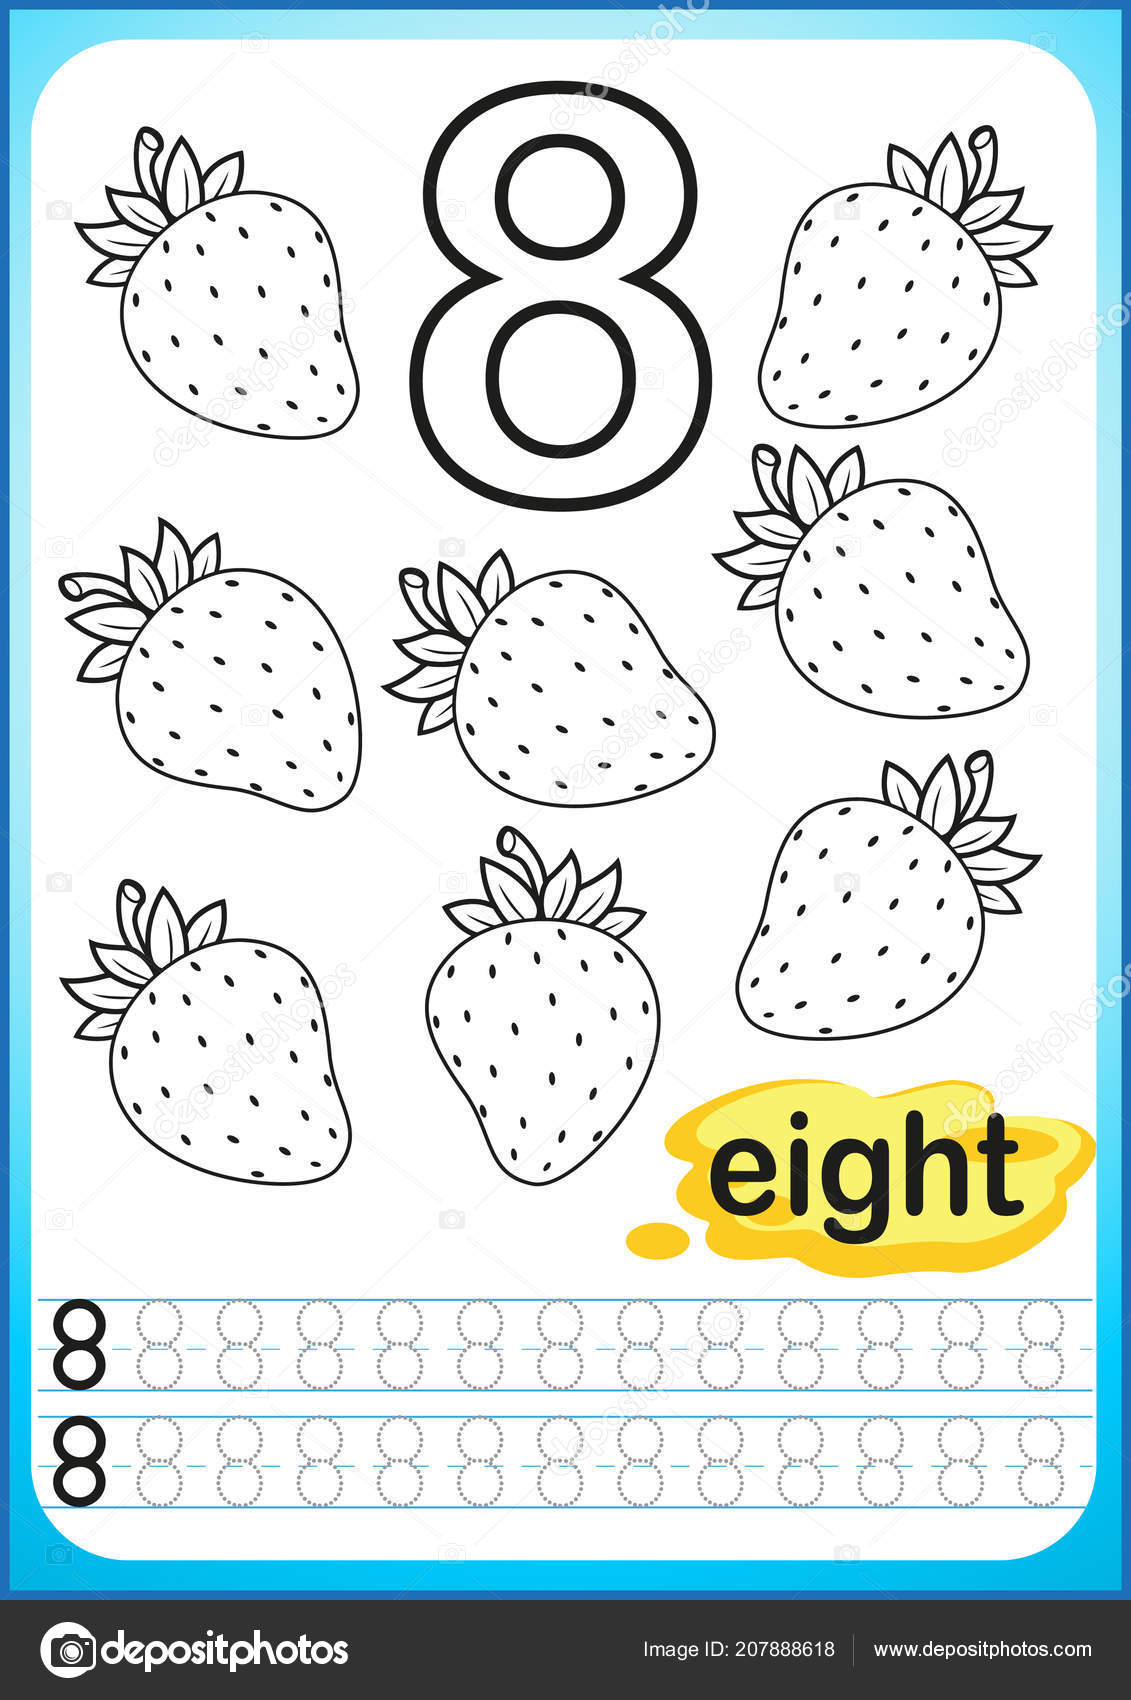 Printable worksheet kindergarten preschool exercises writing numbers simple level difficulty stock vector by natasha